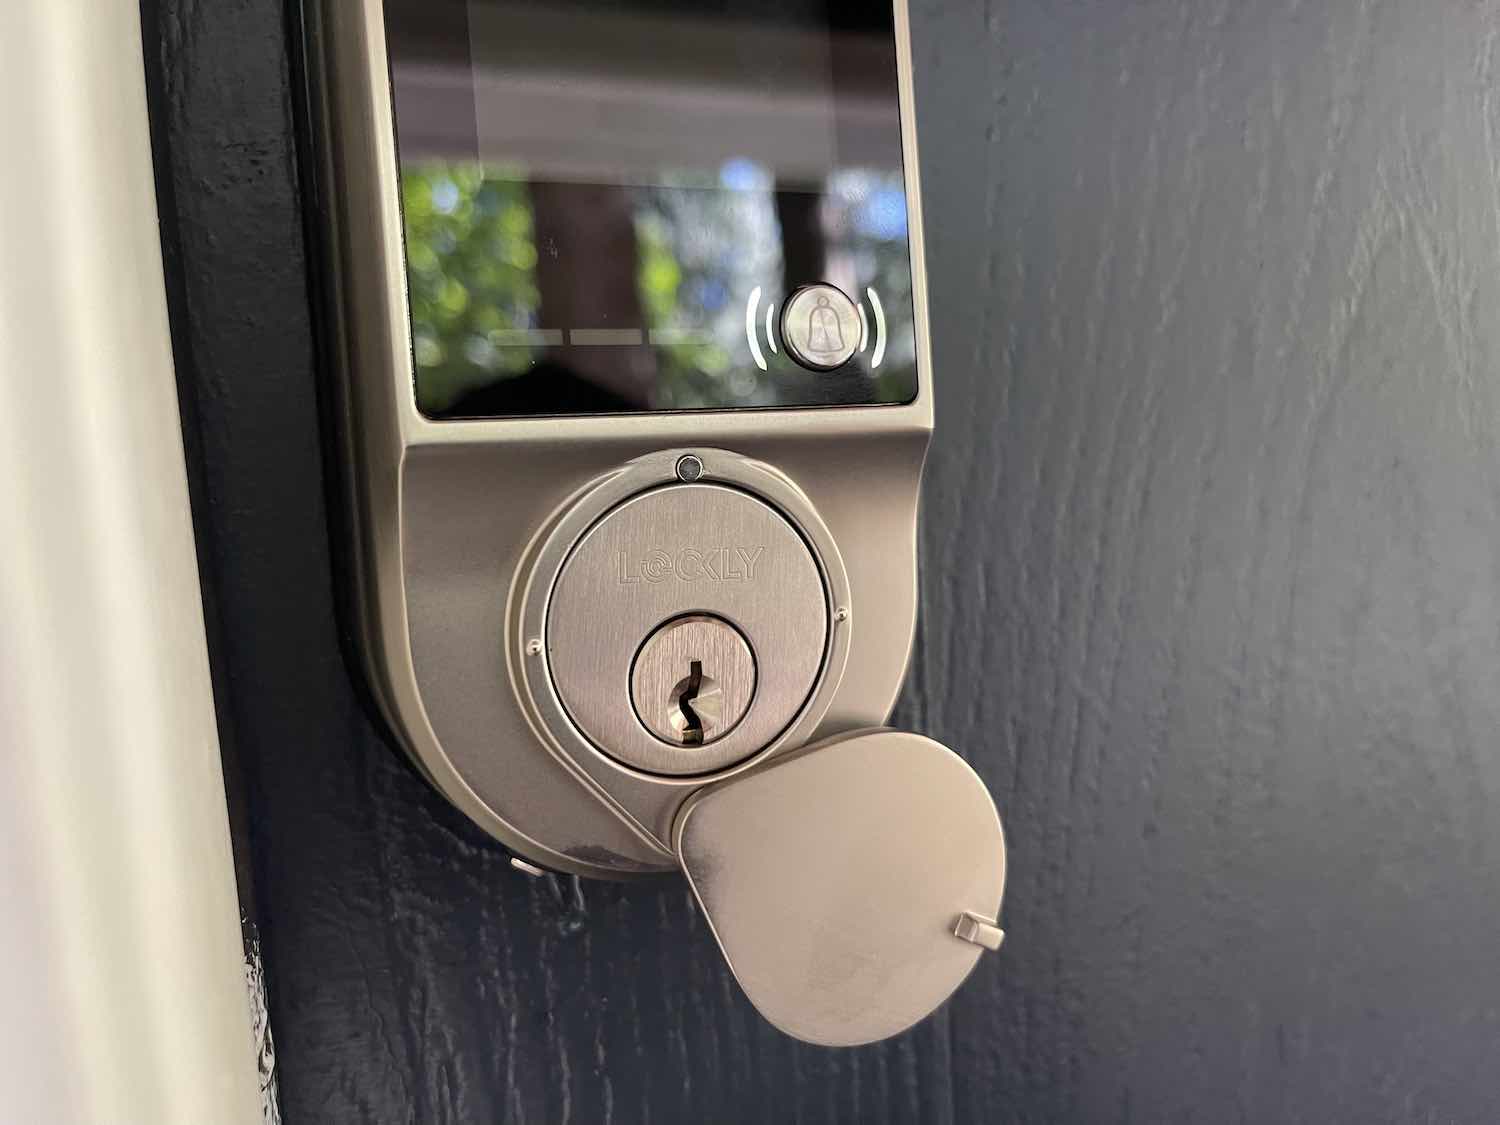 Lockly smart lock with keys